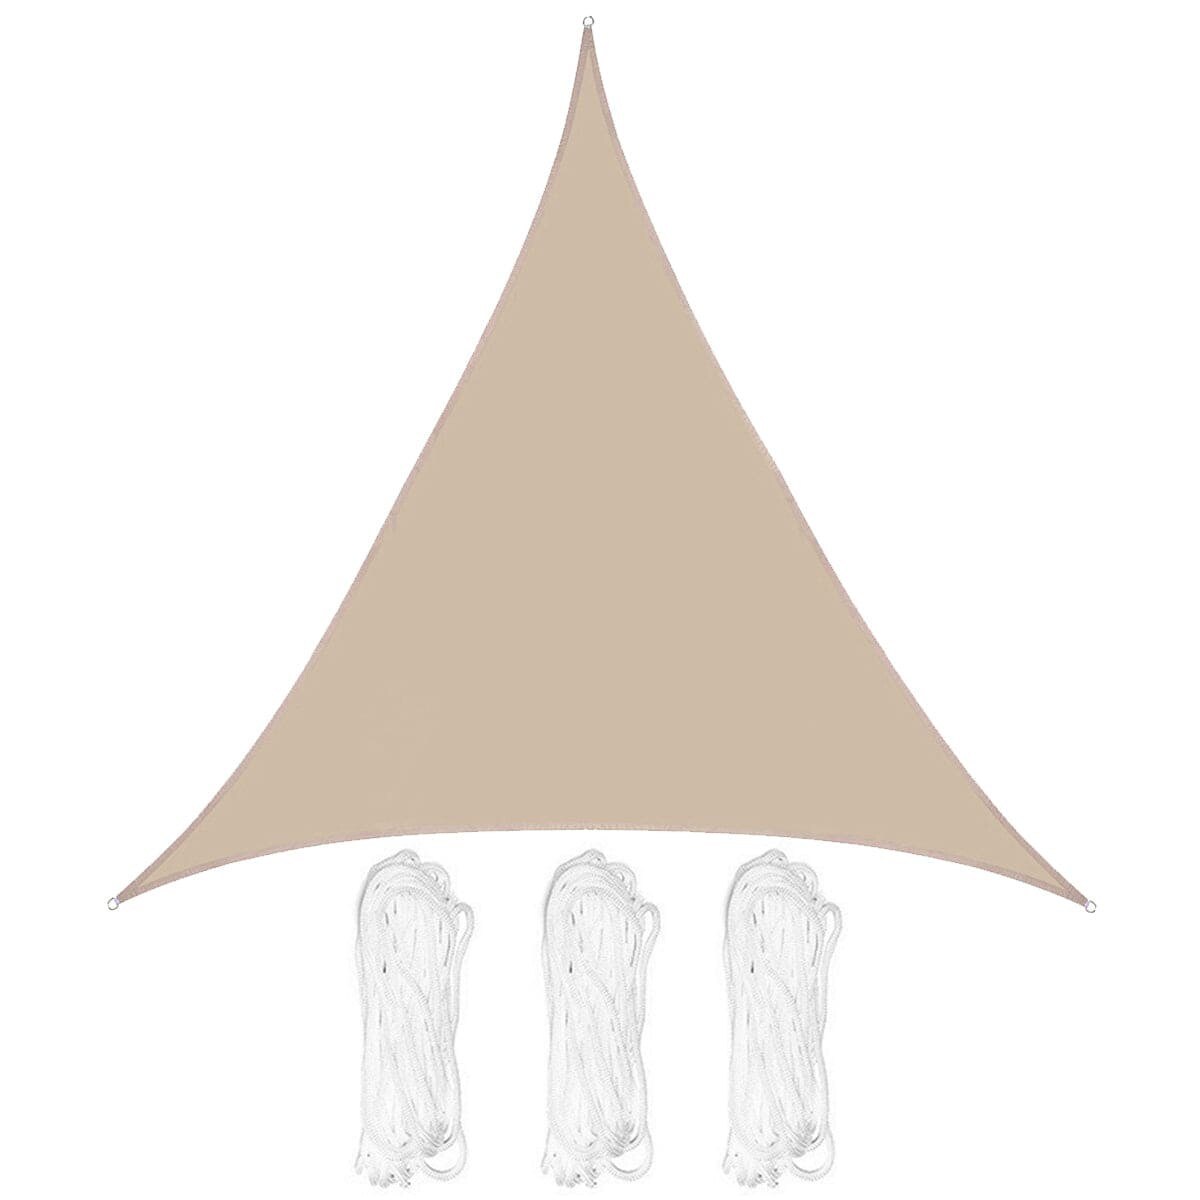 Lona Toldo Vela Triangular Filtro Uv 3,6m Sombra - Beige 